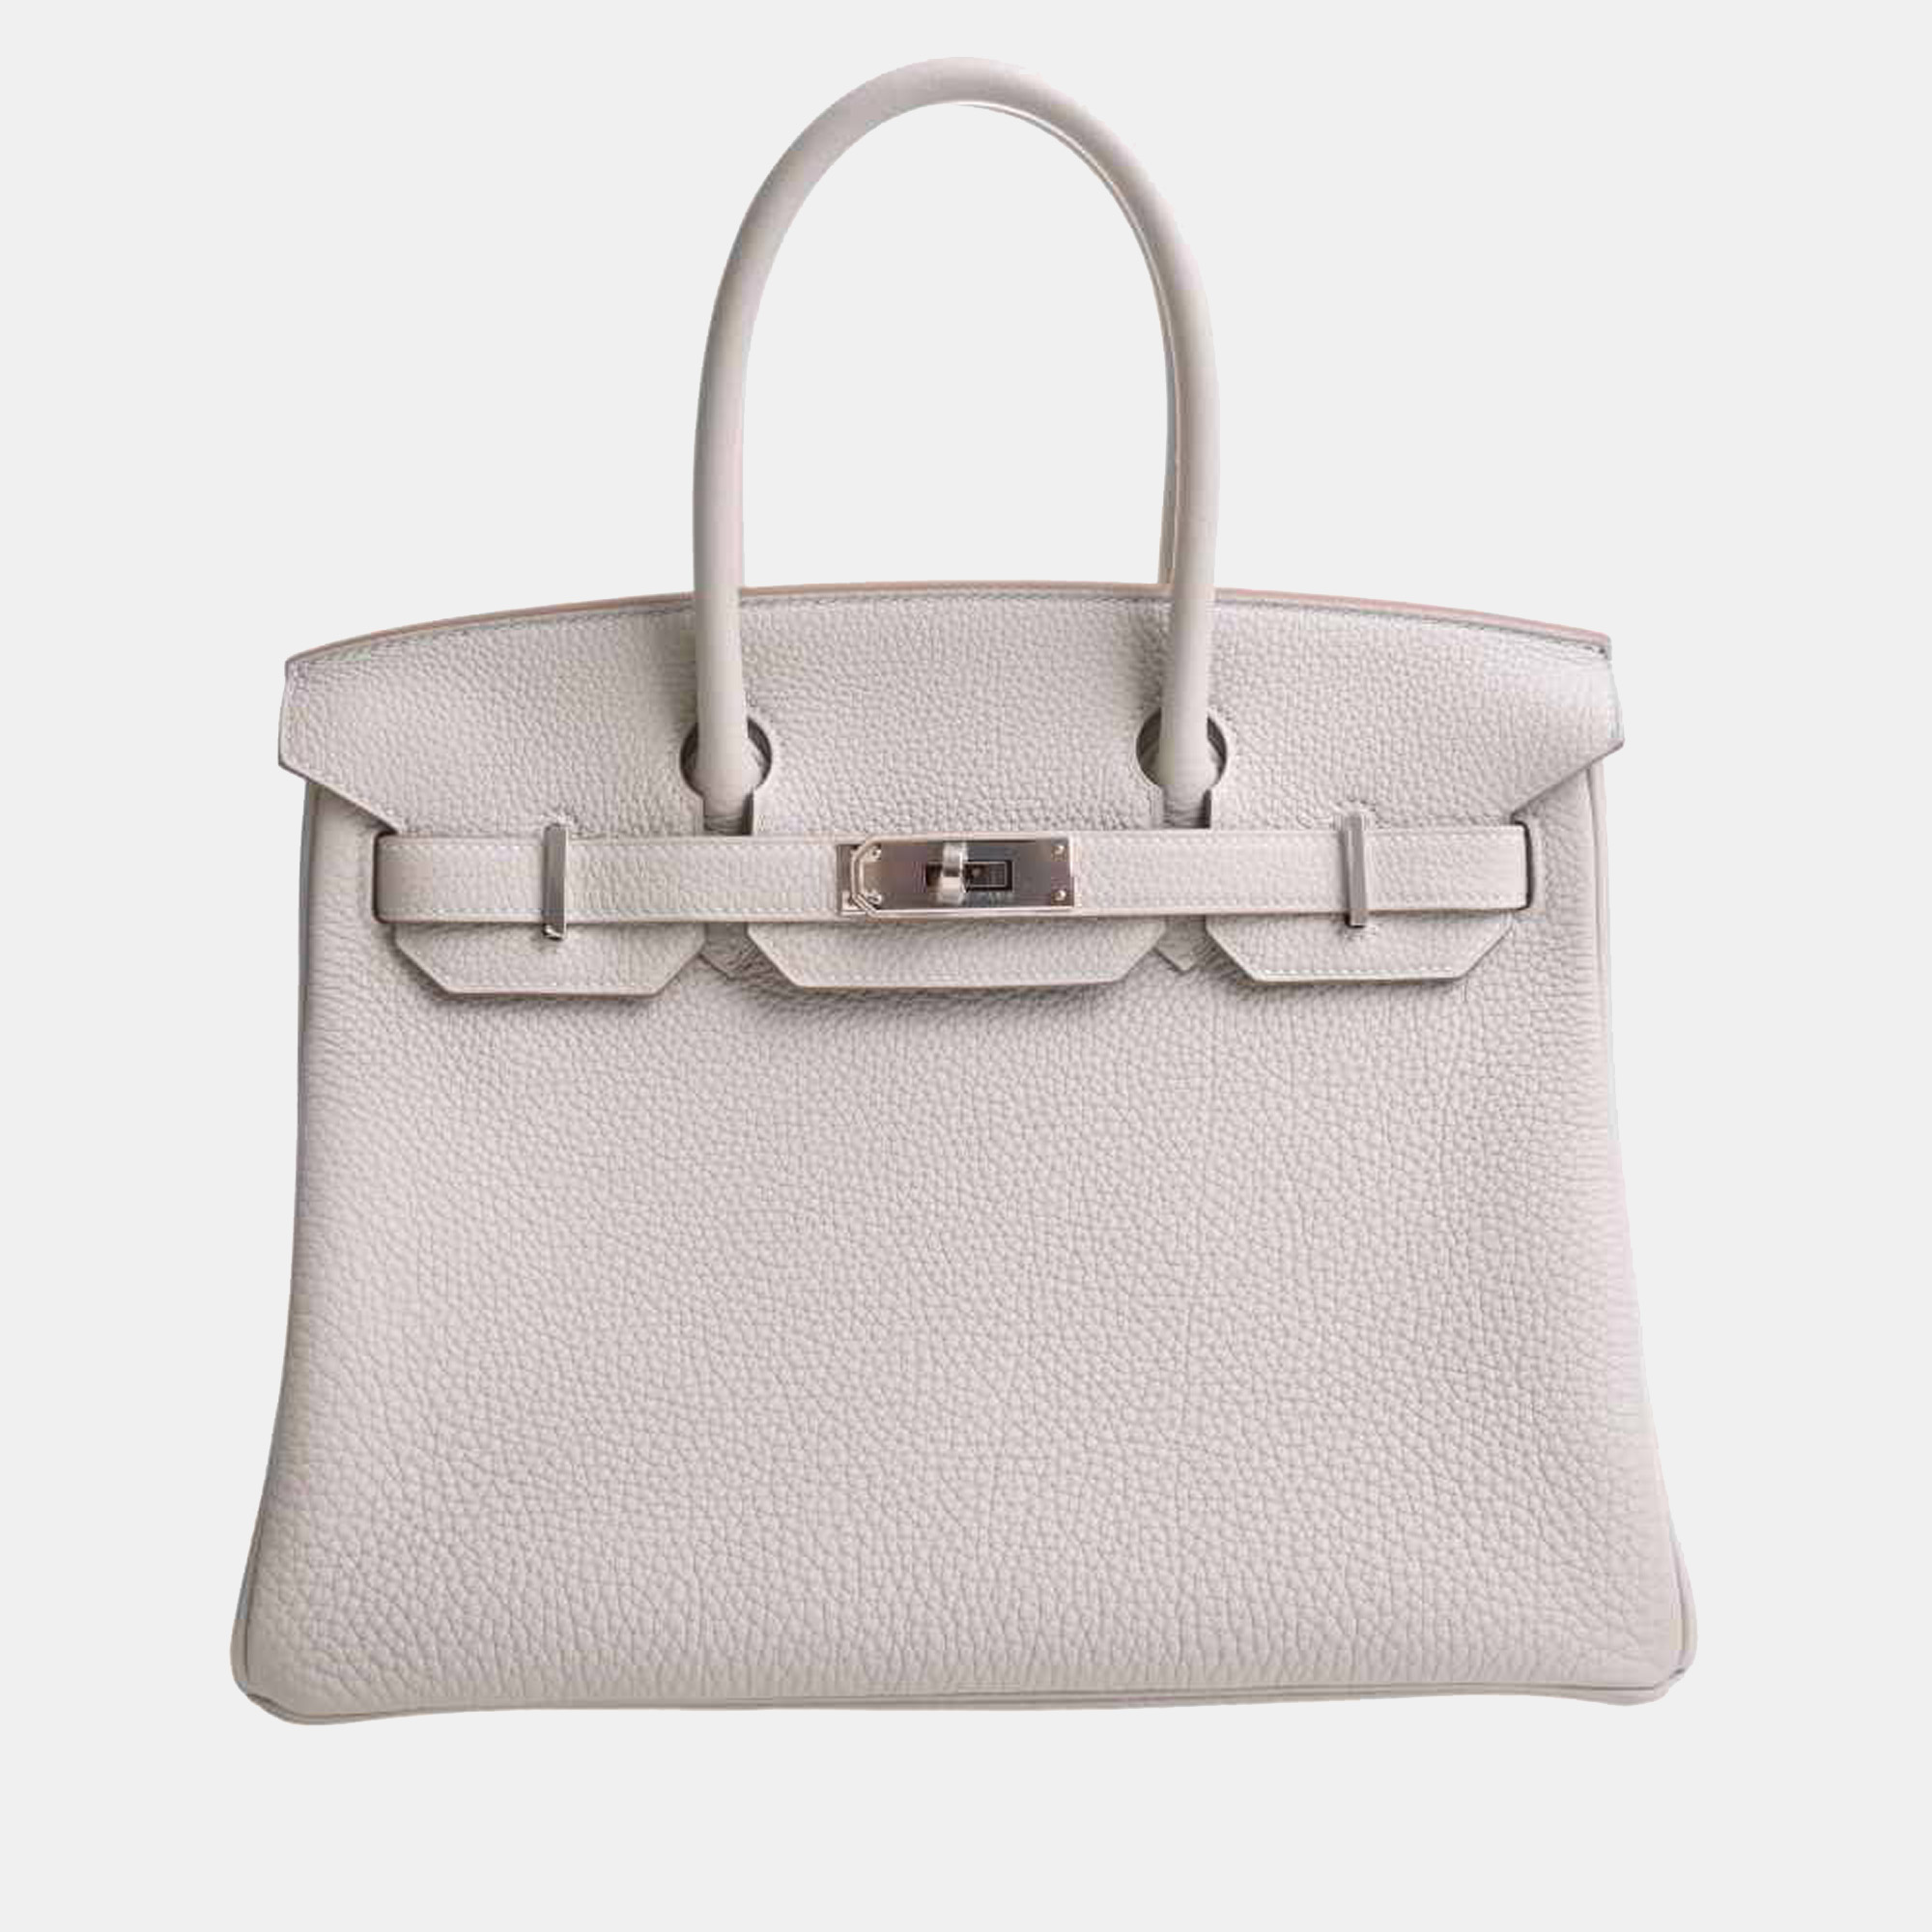 Hermes Birkin 25 Etoupe Swift x Engraved Manufactured in 2016 Silver Hardware Handbag Ladies Gray Brikin25 BK25